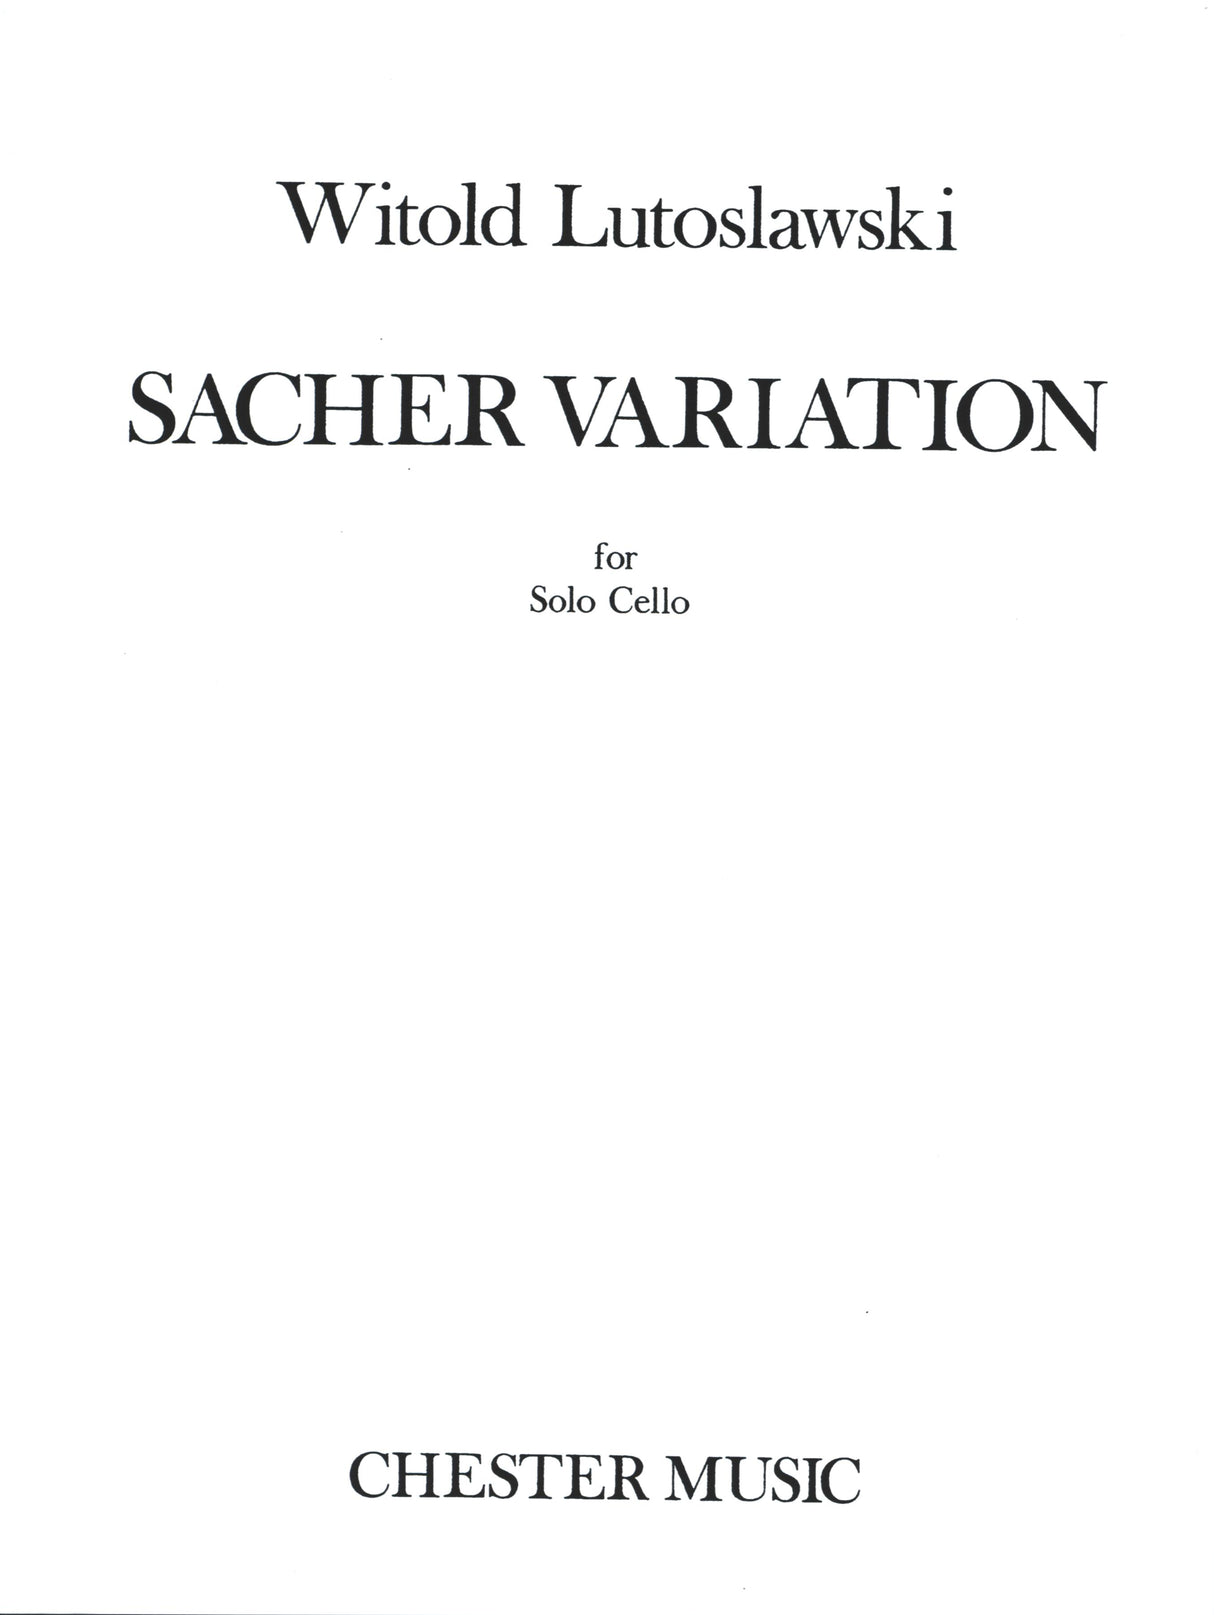 Lutosławski: Sacher Variation